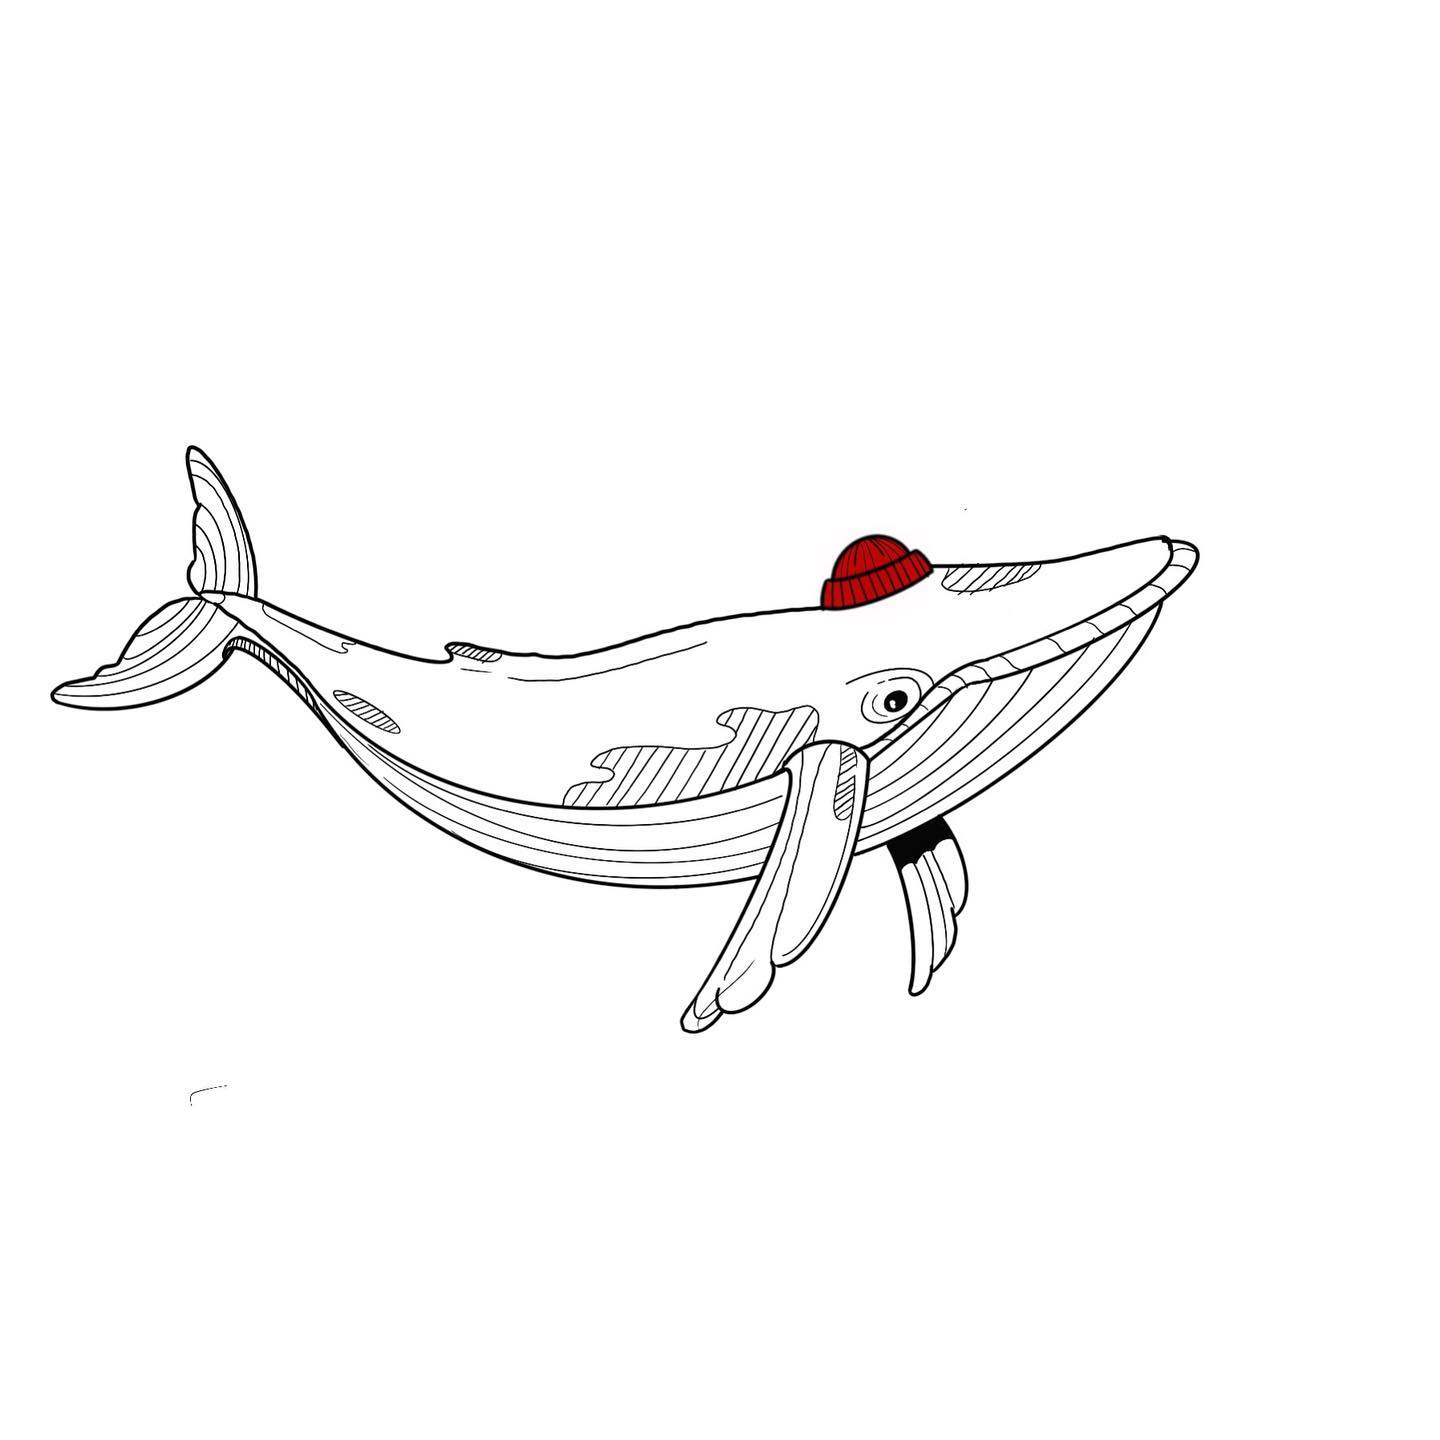 _whale  _
Taken  

#flashtattoo #flashtattoodesign #tattooideas #illustration #o